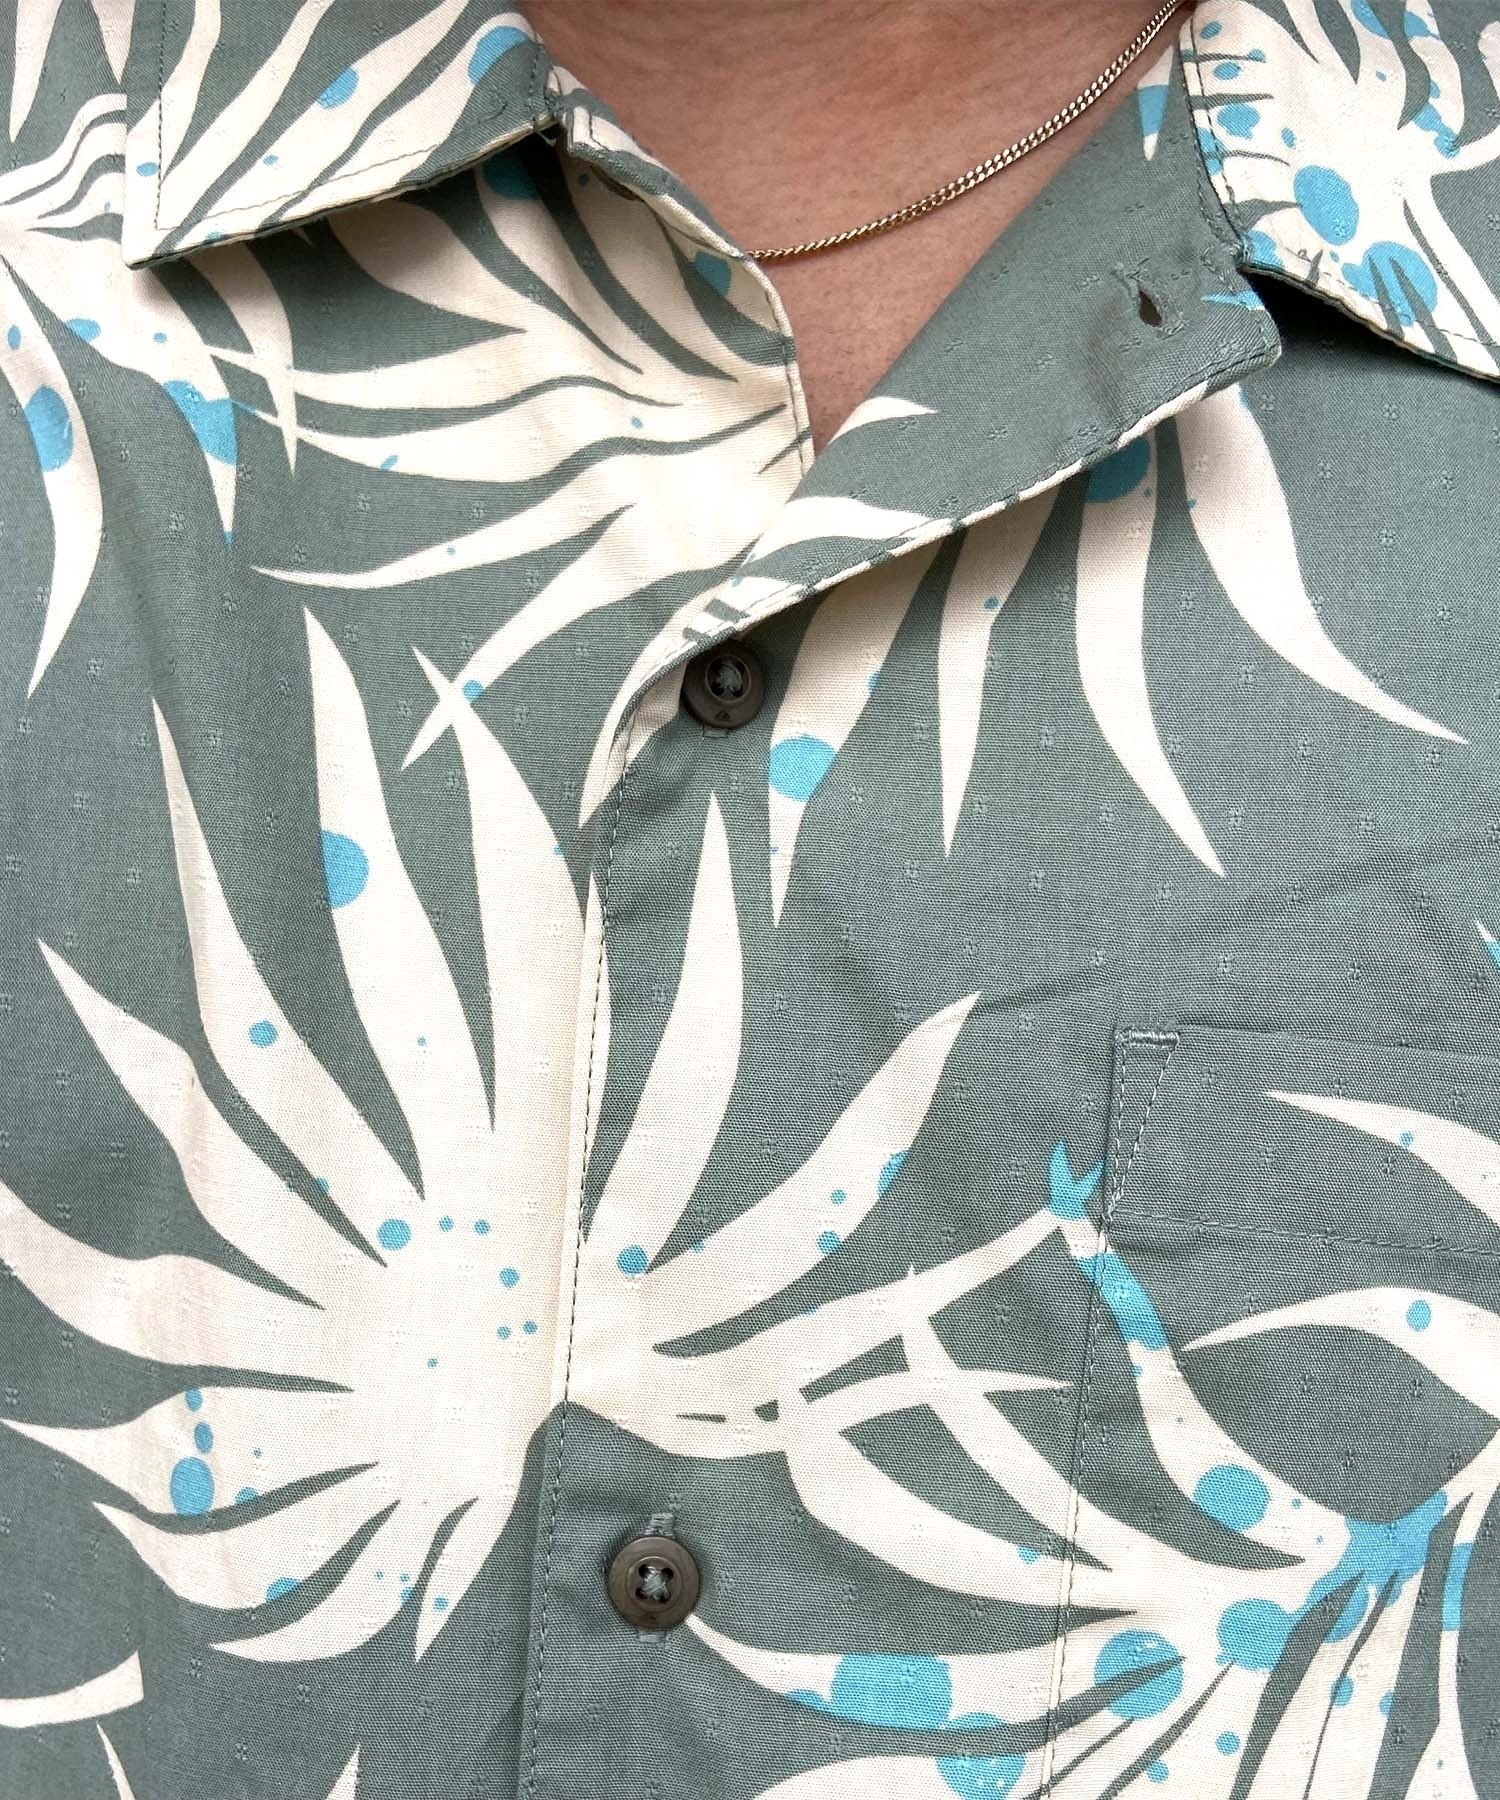 QUIKSILVER クイックシルバー メンズ 半袖 シャツ アロハシャツ とろみシャツ 総柄 レギュラーフィット 胸ポケット AQYWT03324(GLW6-M)